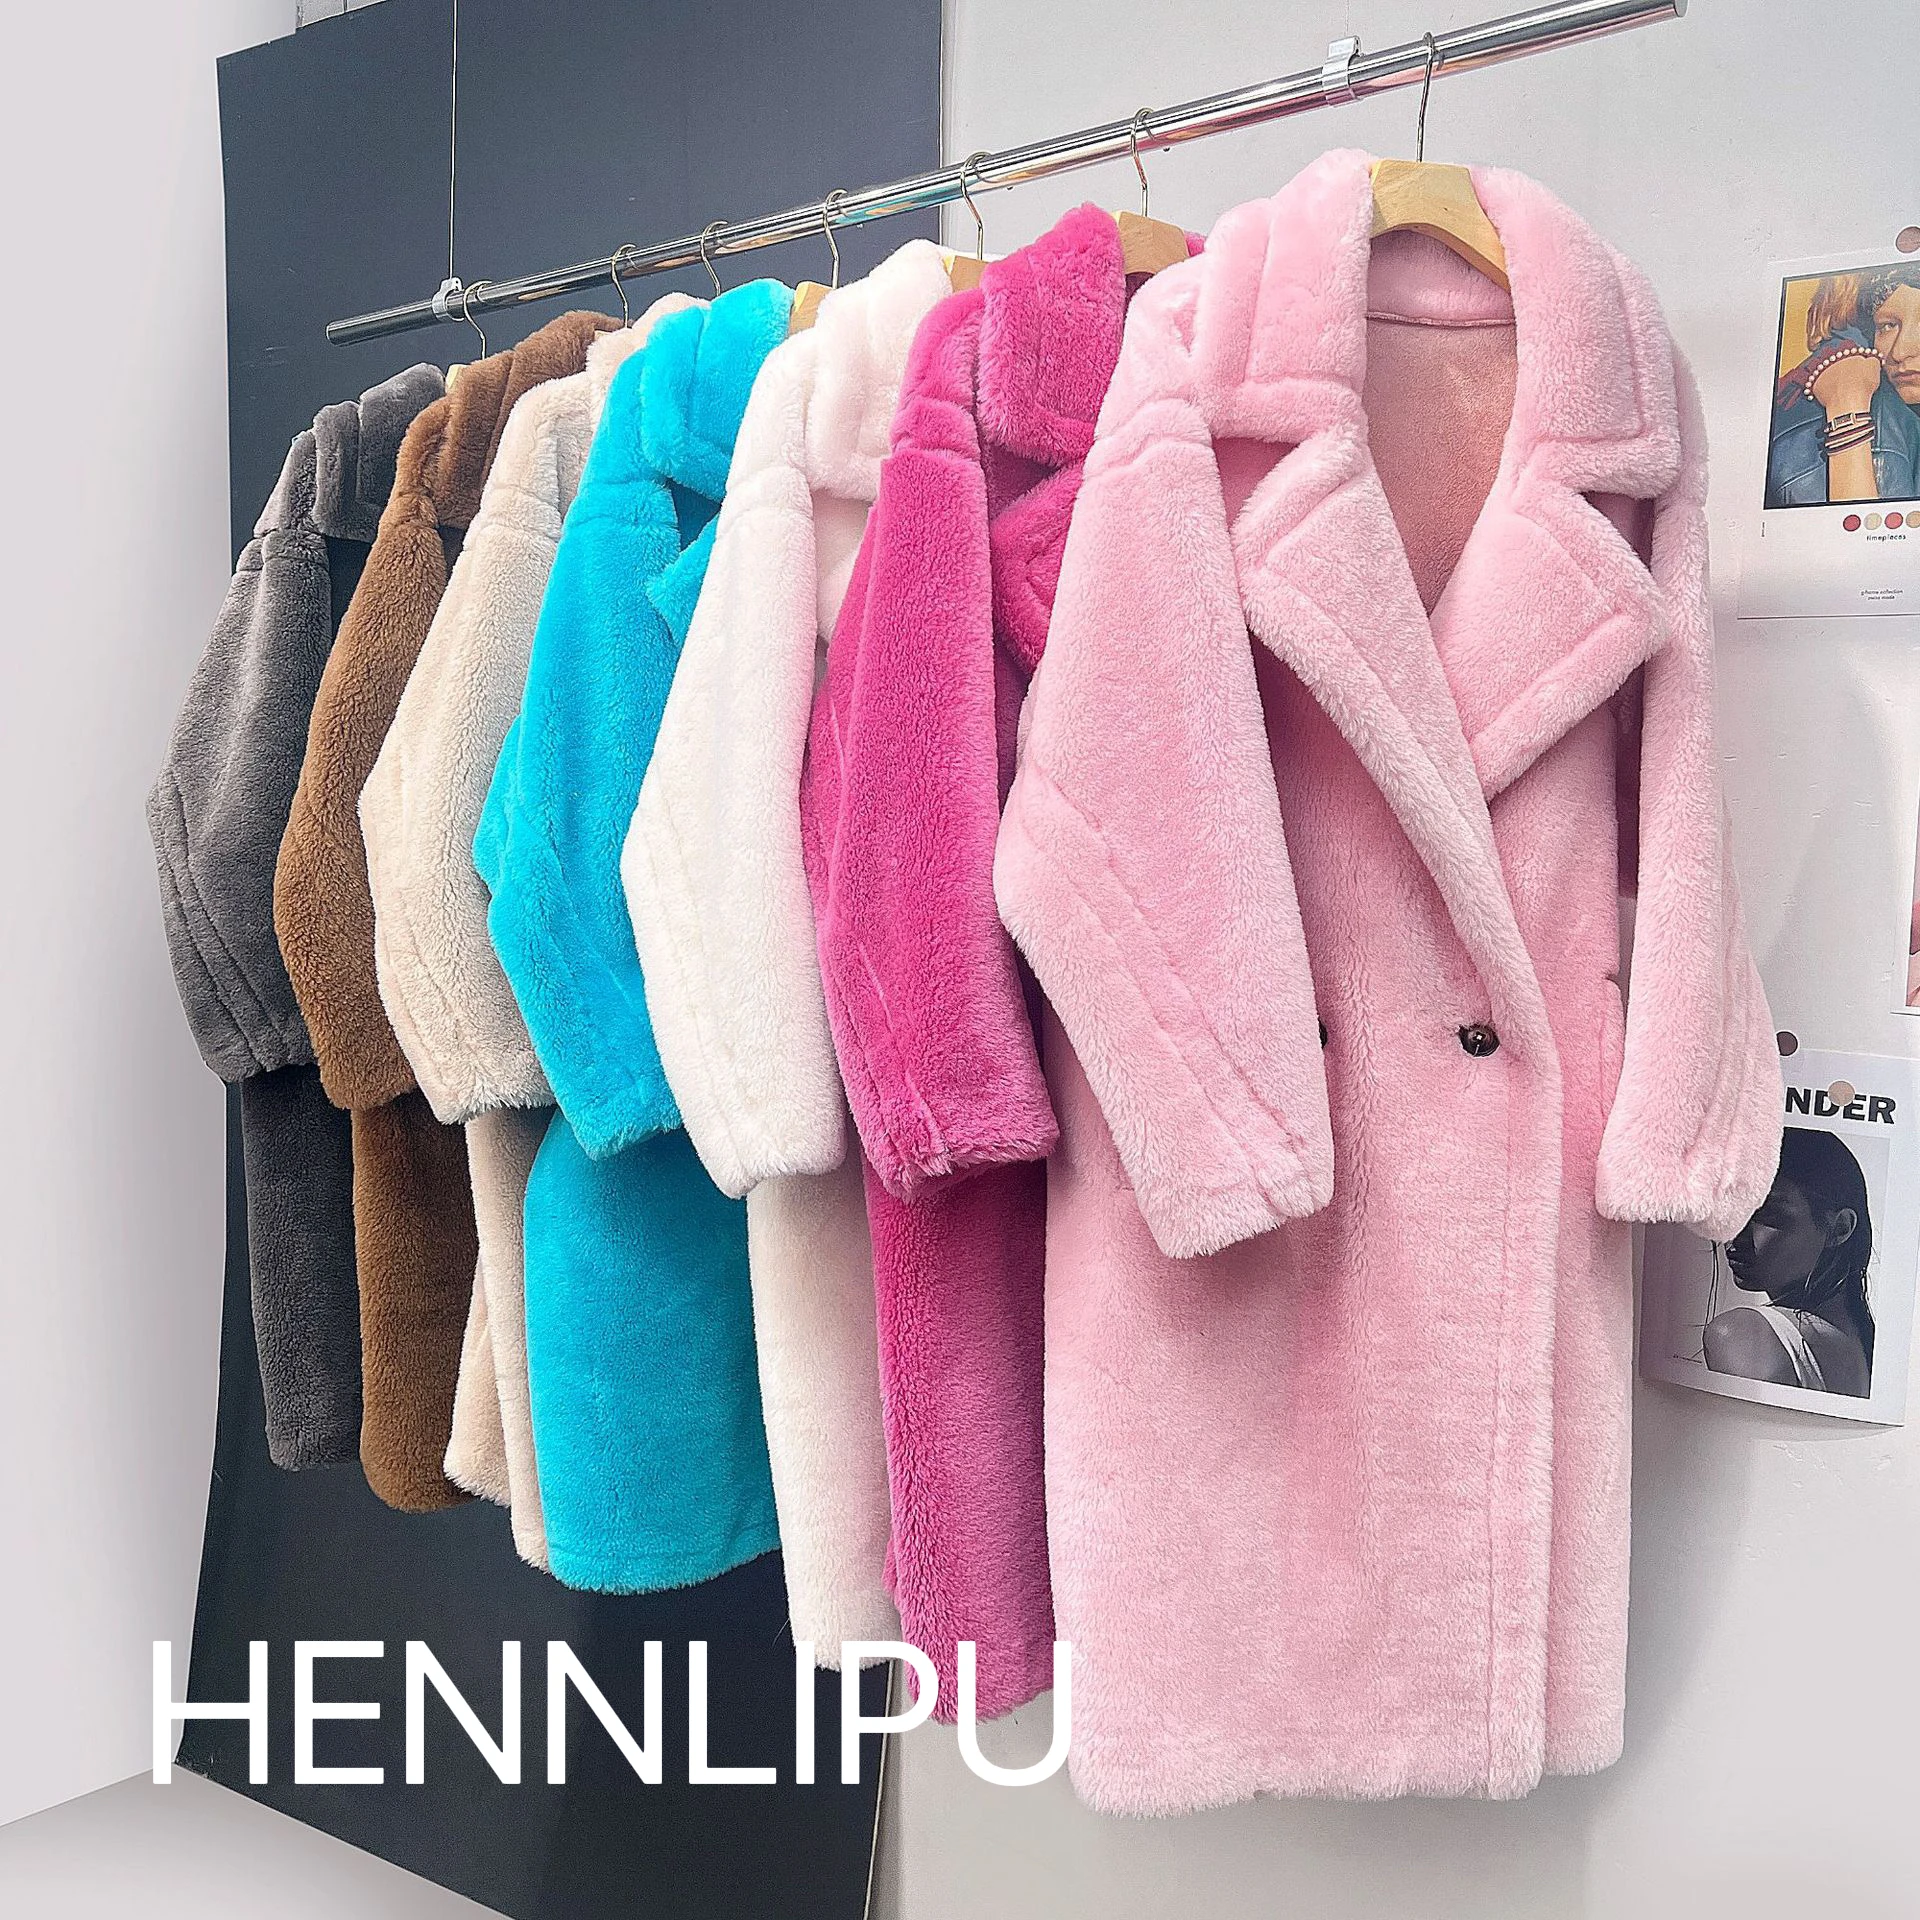 HENNLIPU new women 100% Australian wool overcoat fashion top cold coat new year gift party